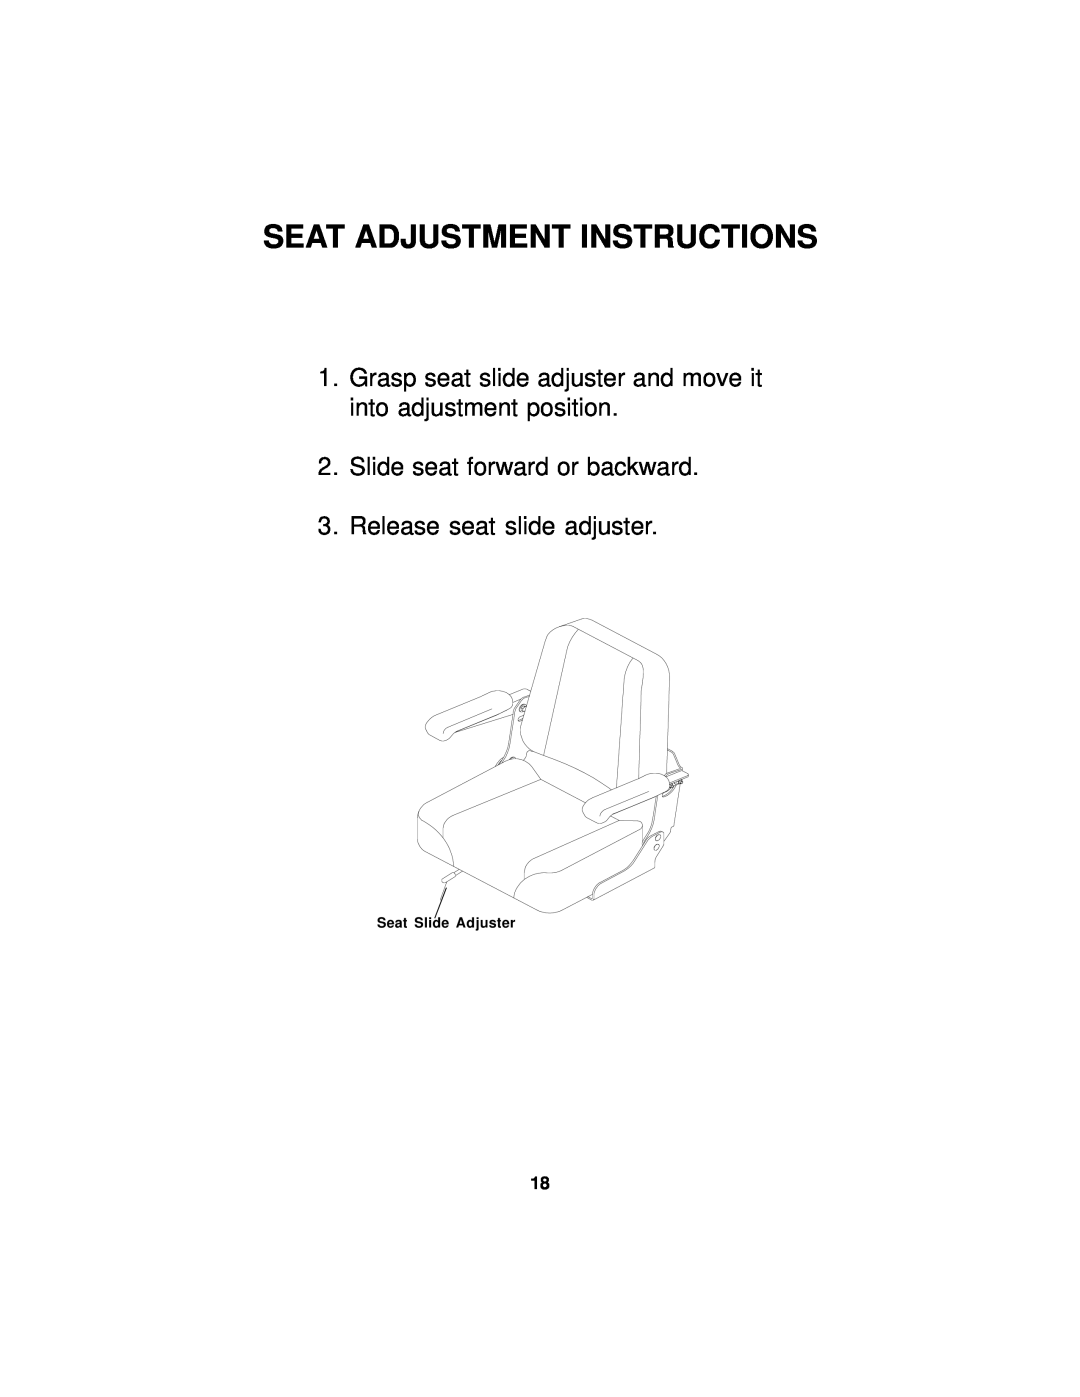 Dixon 18124-0804 manual Seat Adjustment Instructions, Grasp seat slide adjuster and move it into adjustment position 